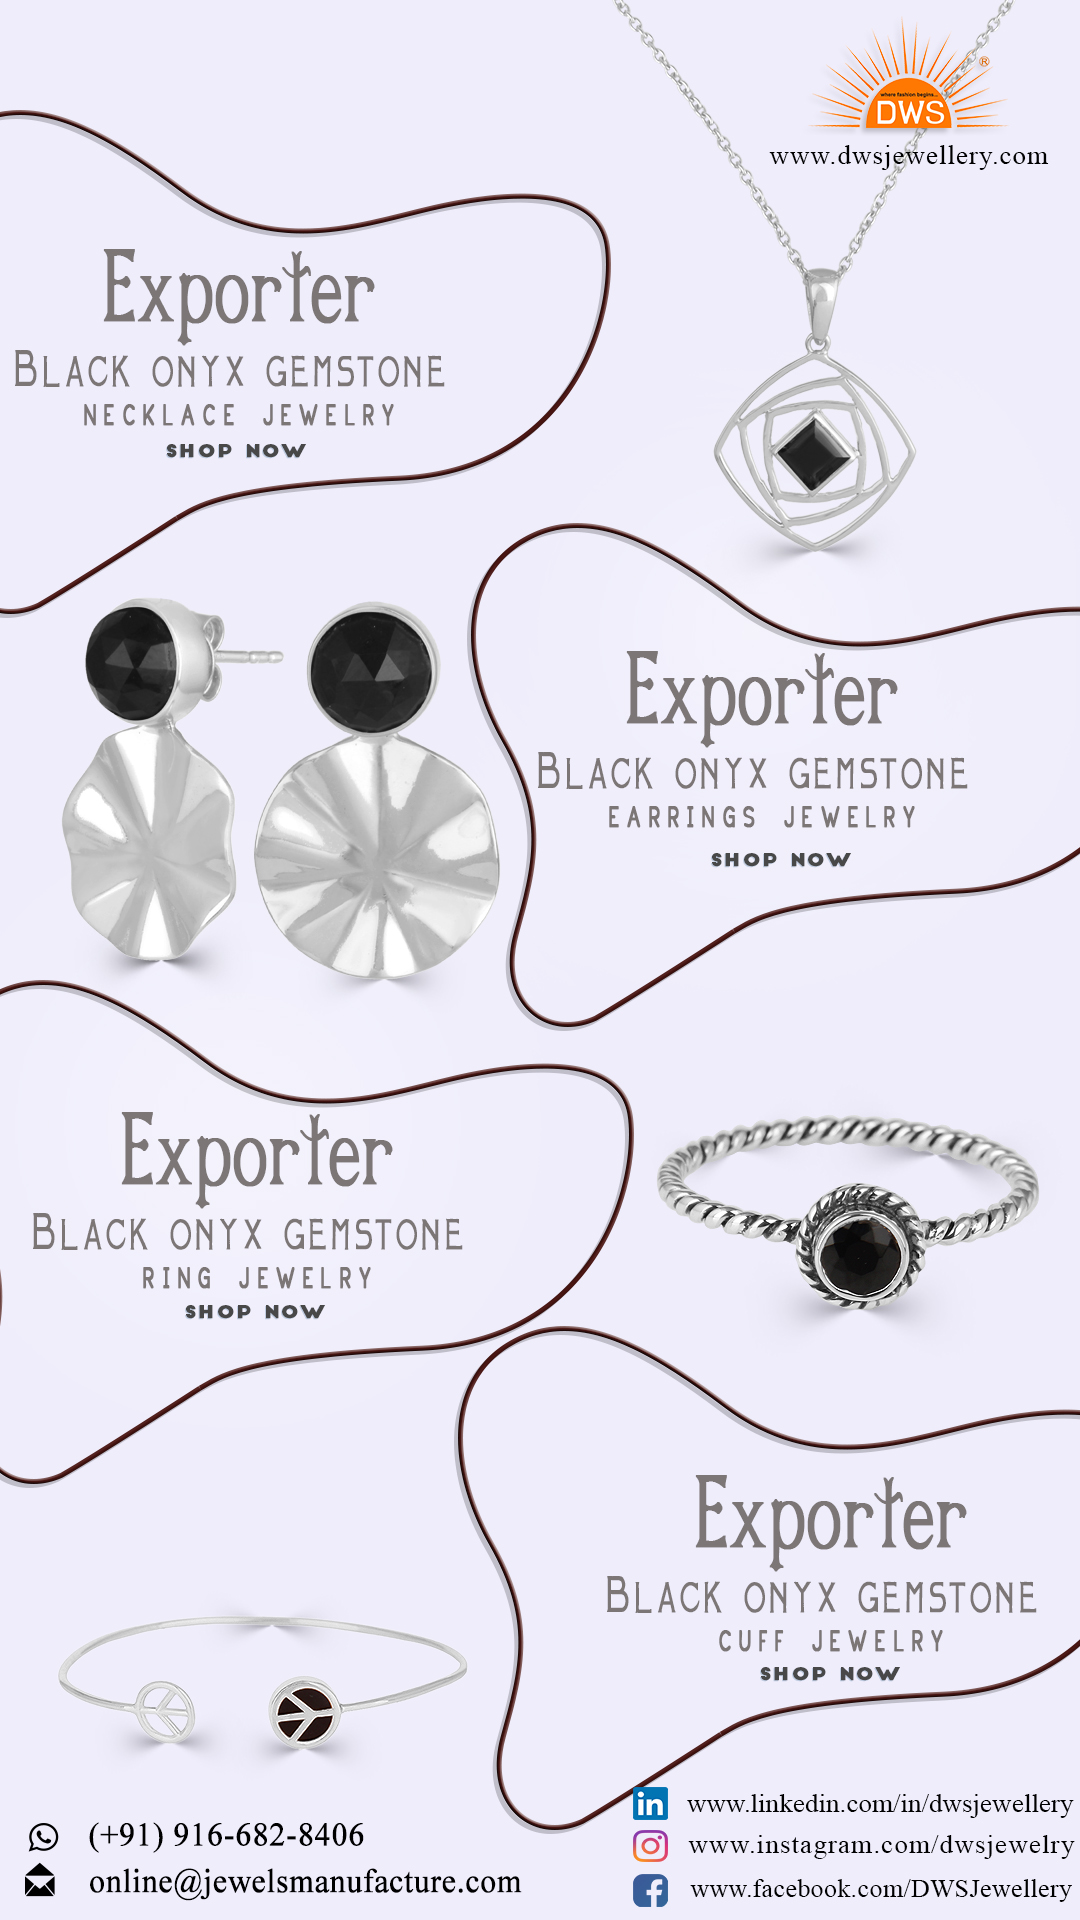 How to style black onyx jewelry with western attires